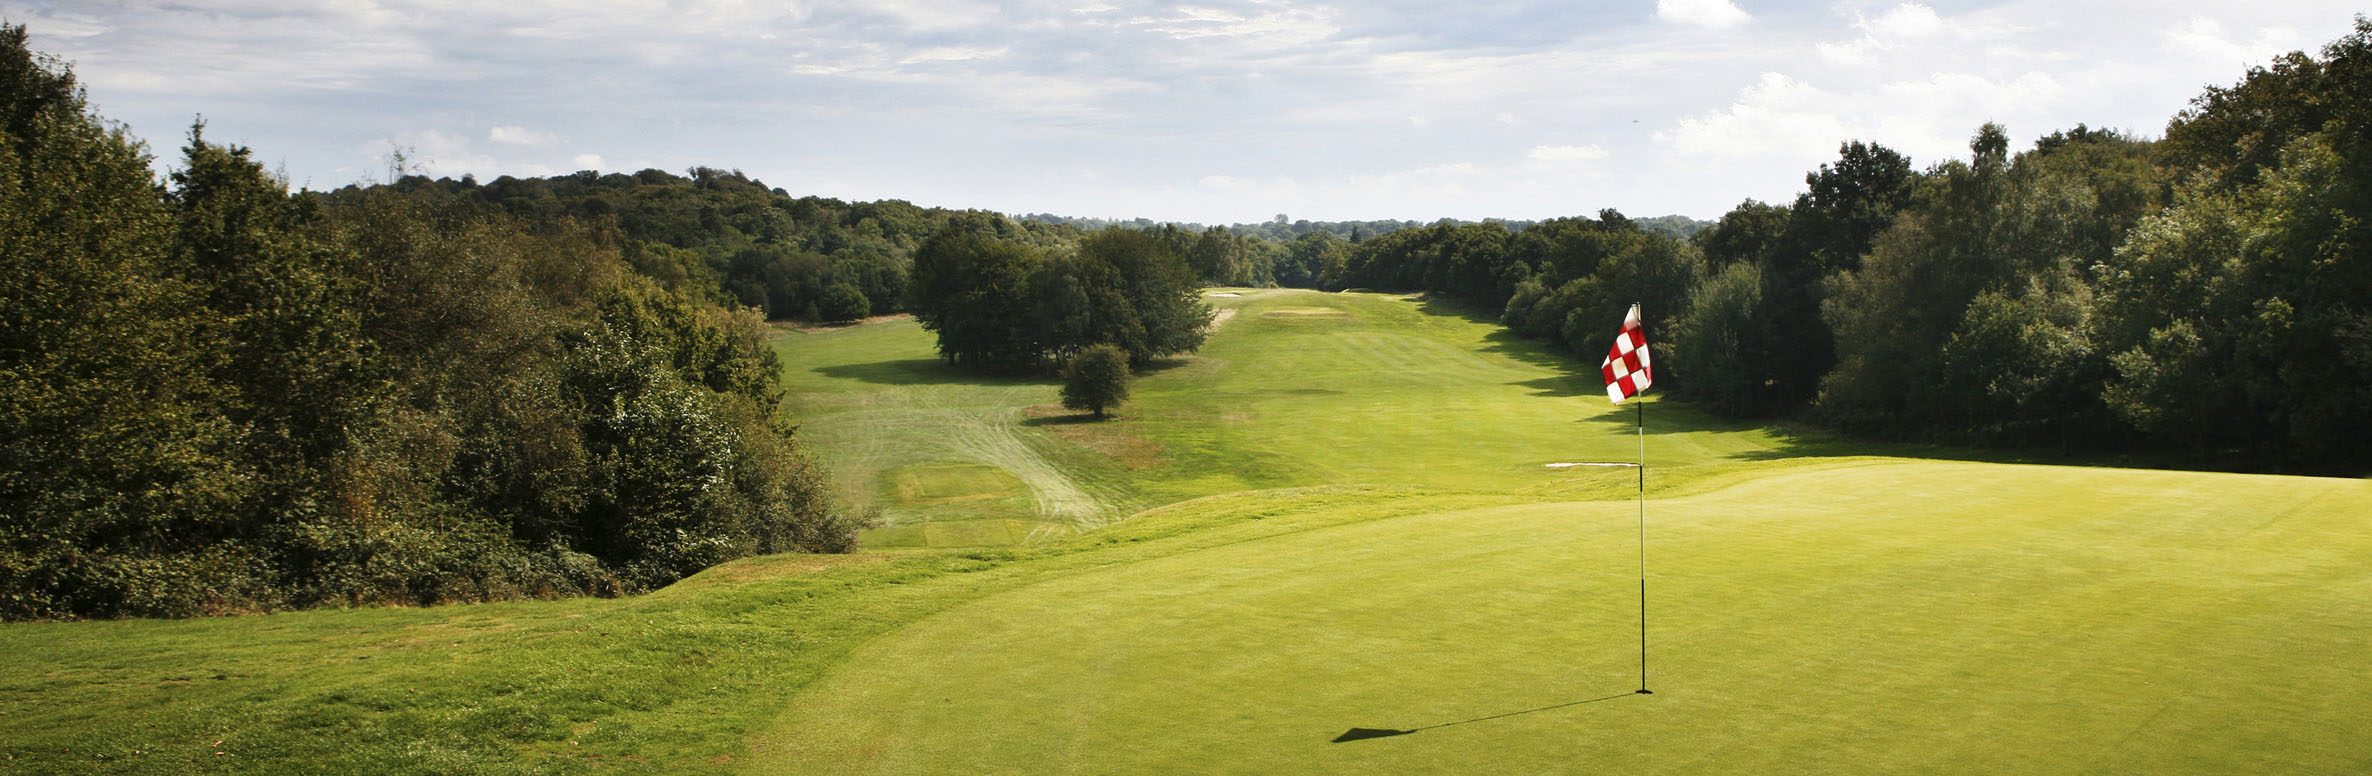 Golf Course Image - Mannings Heath Golf Club No. 13